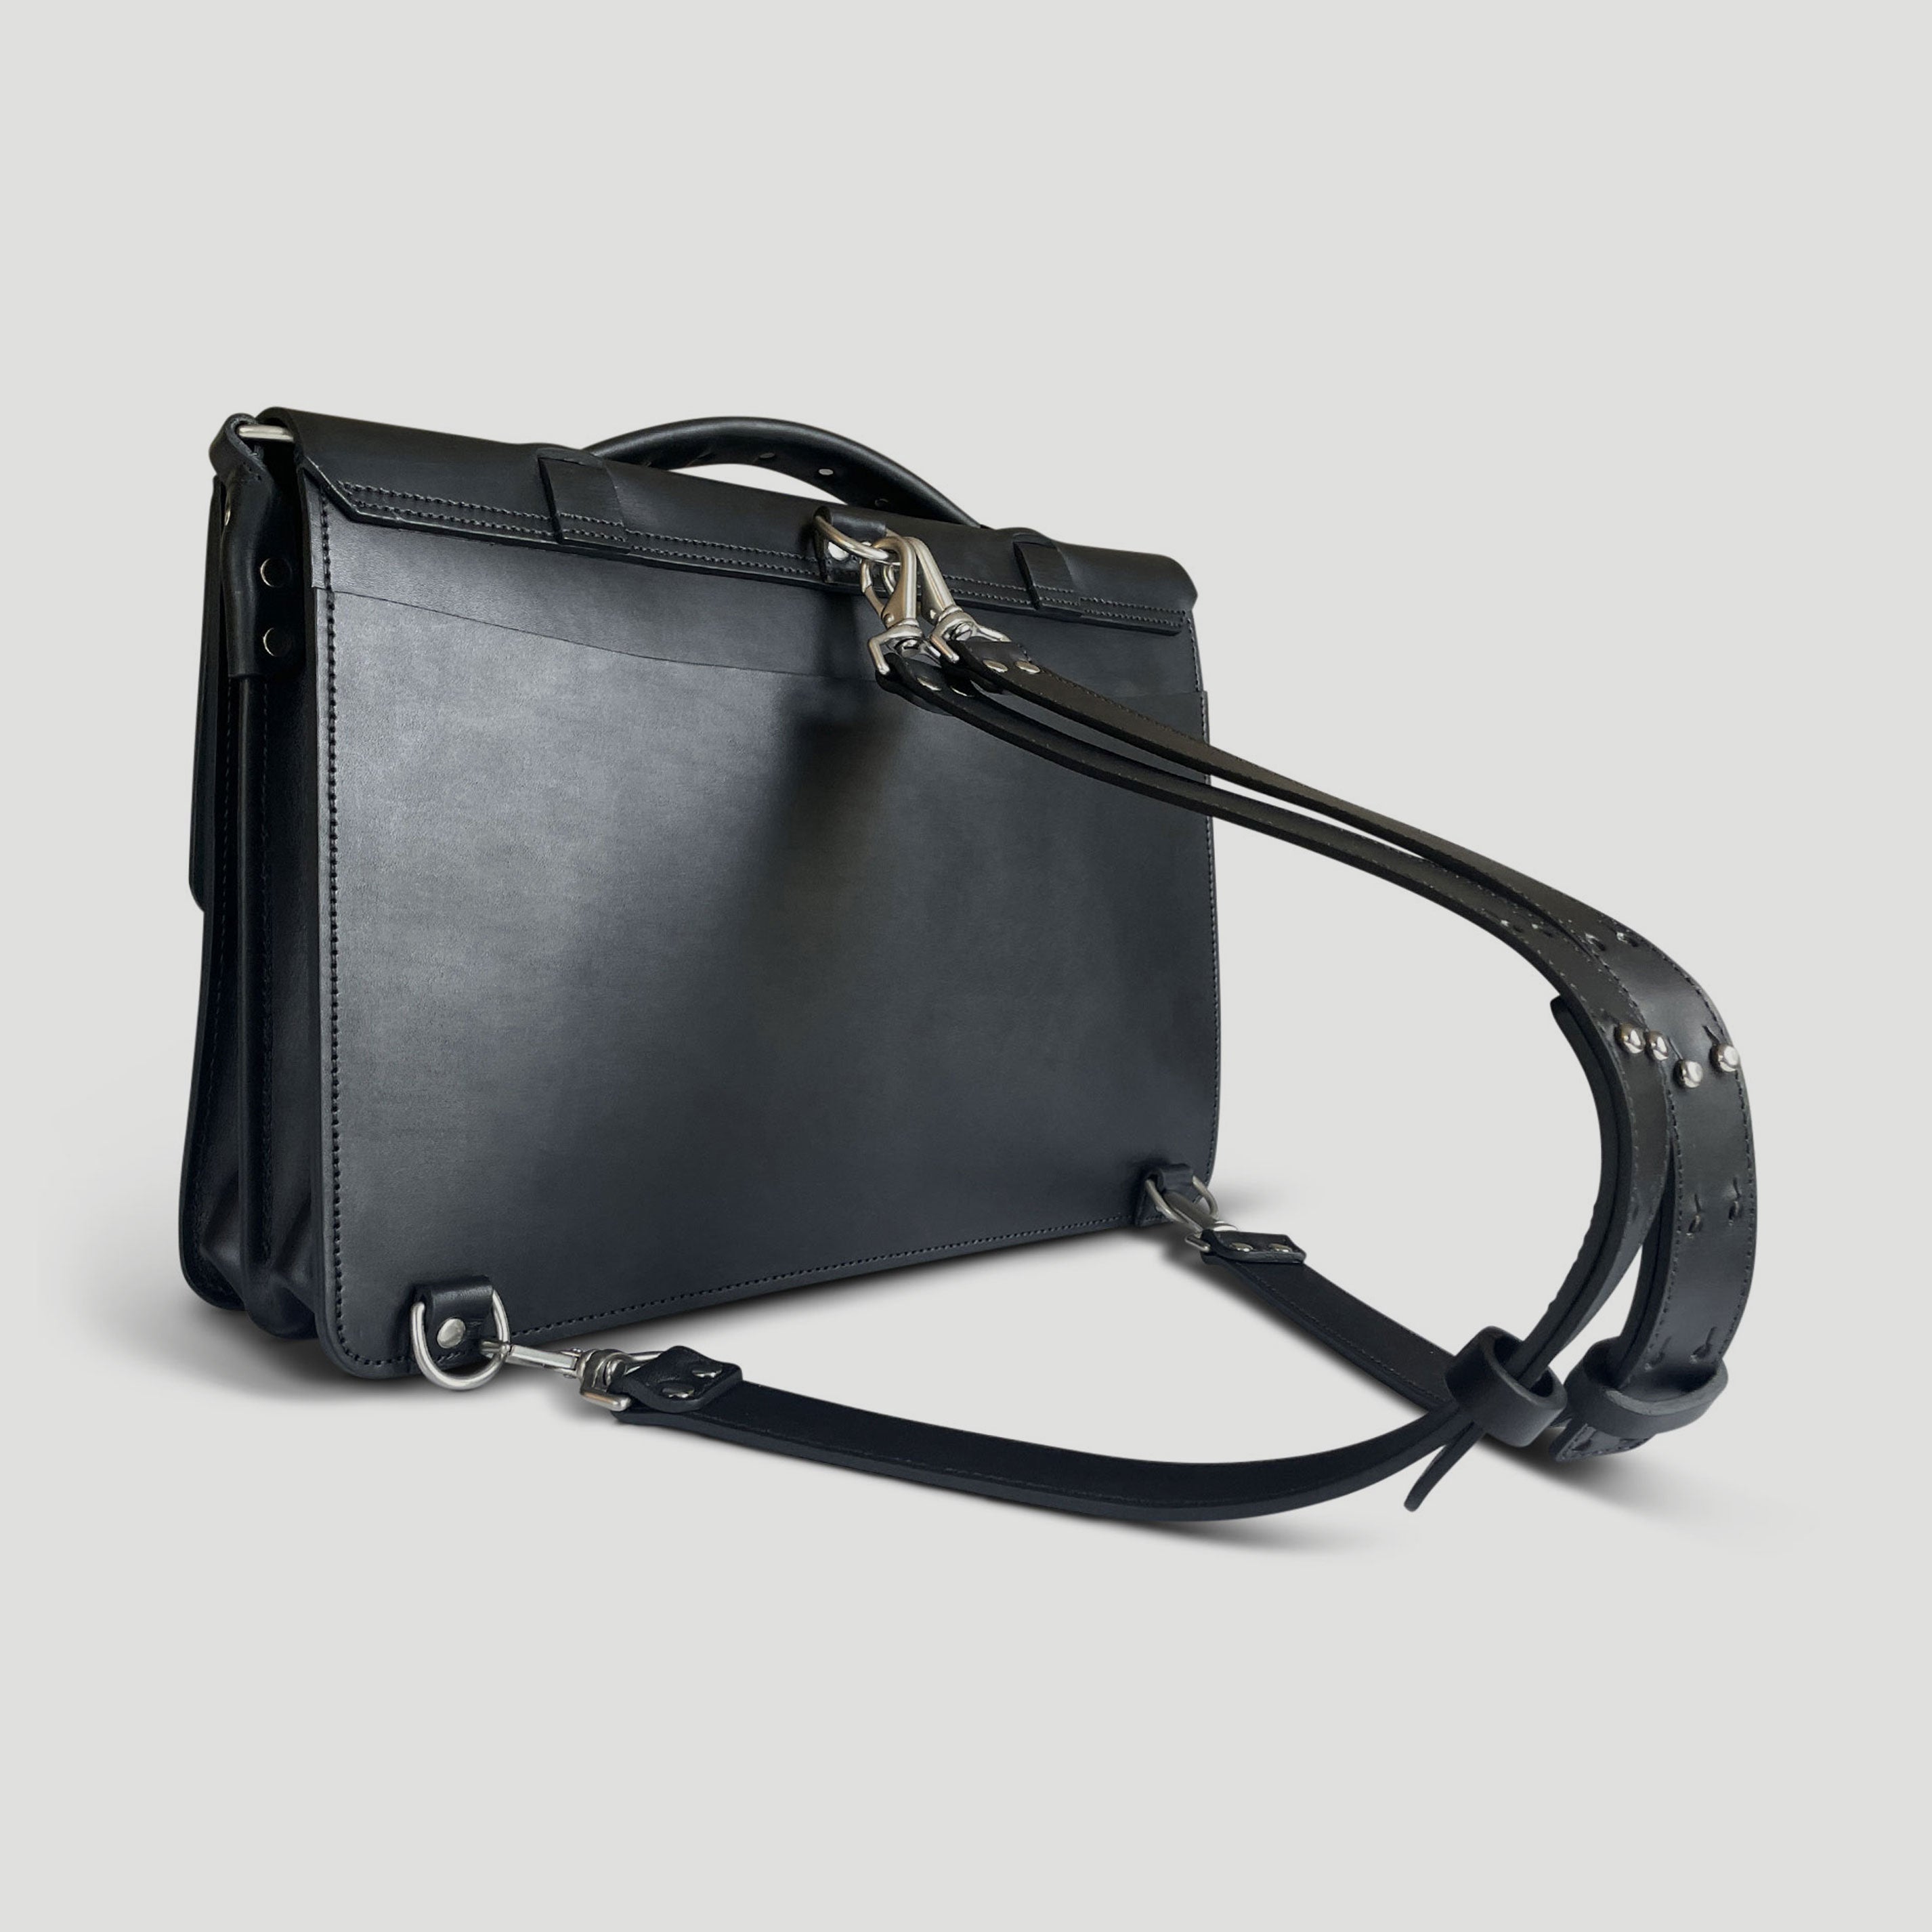 40% OFF on Rohit Bal Black Leather Messenger Bag Messenger Bag(Black, 12 L)  on Flipkart | PaisaWapas.com